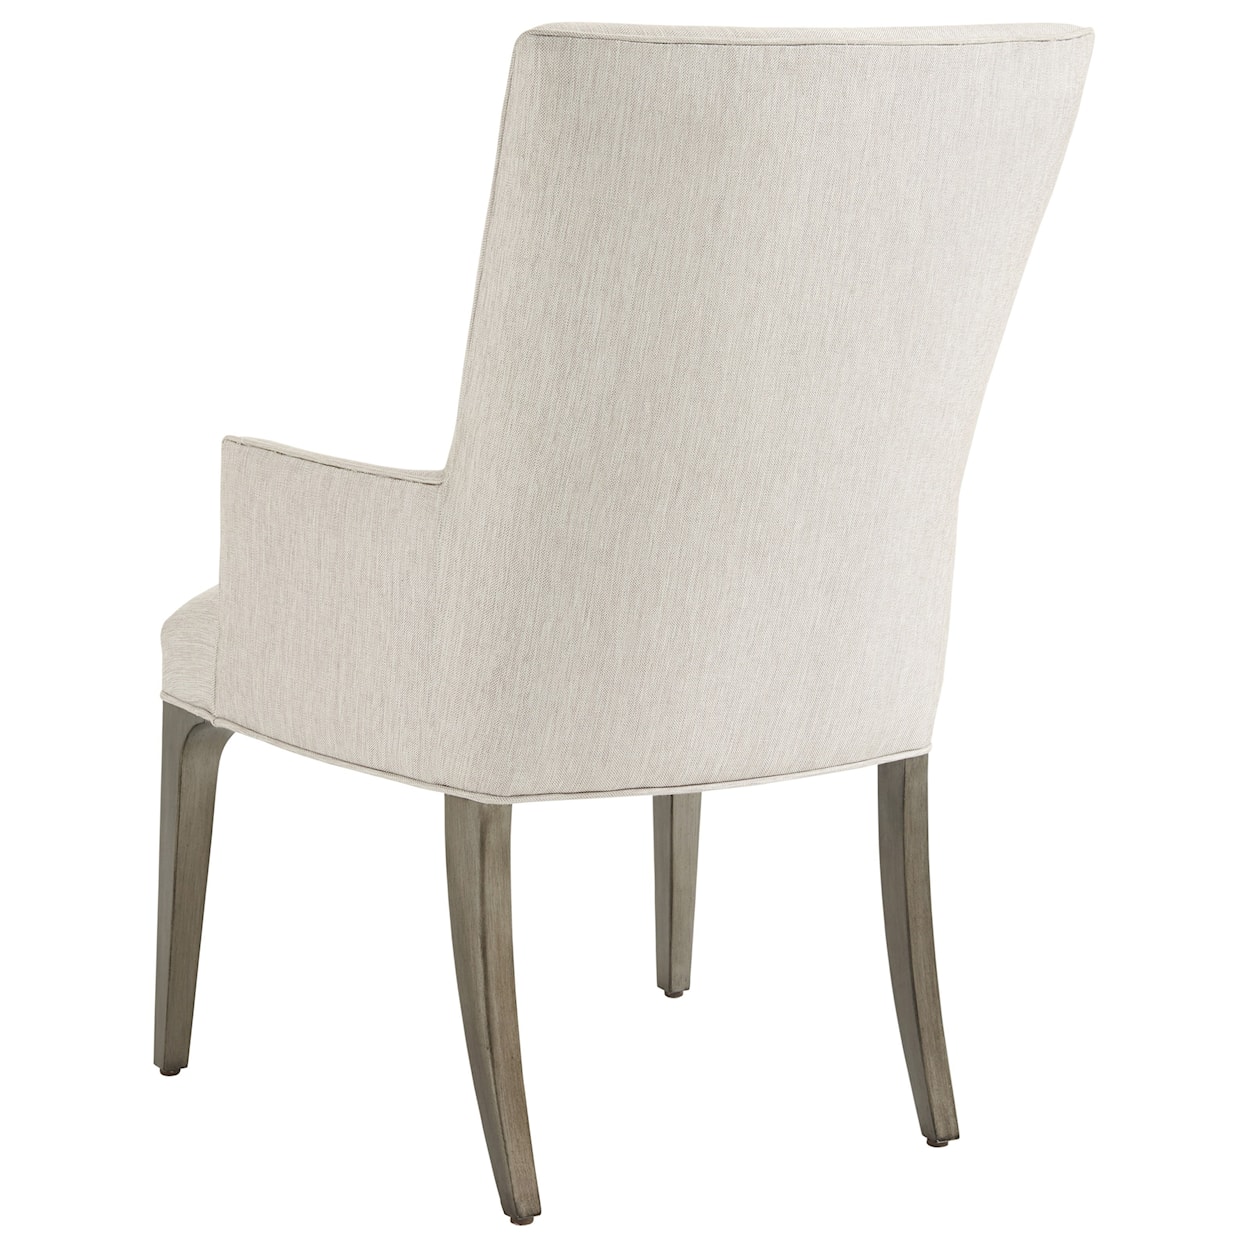 Lexington Ariana Bellamy Upholstered Arm Chair (married)